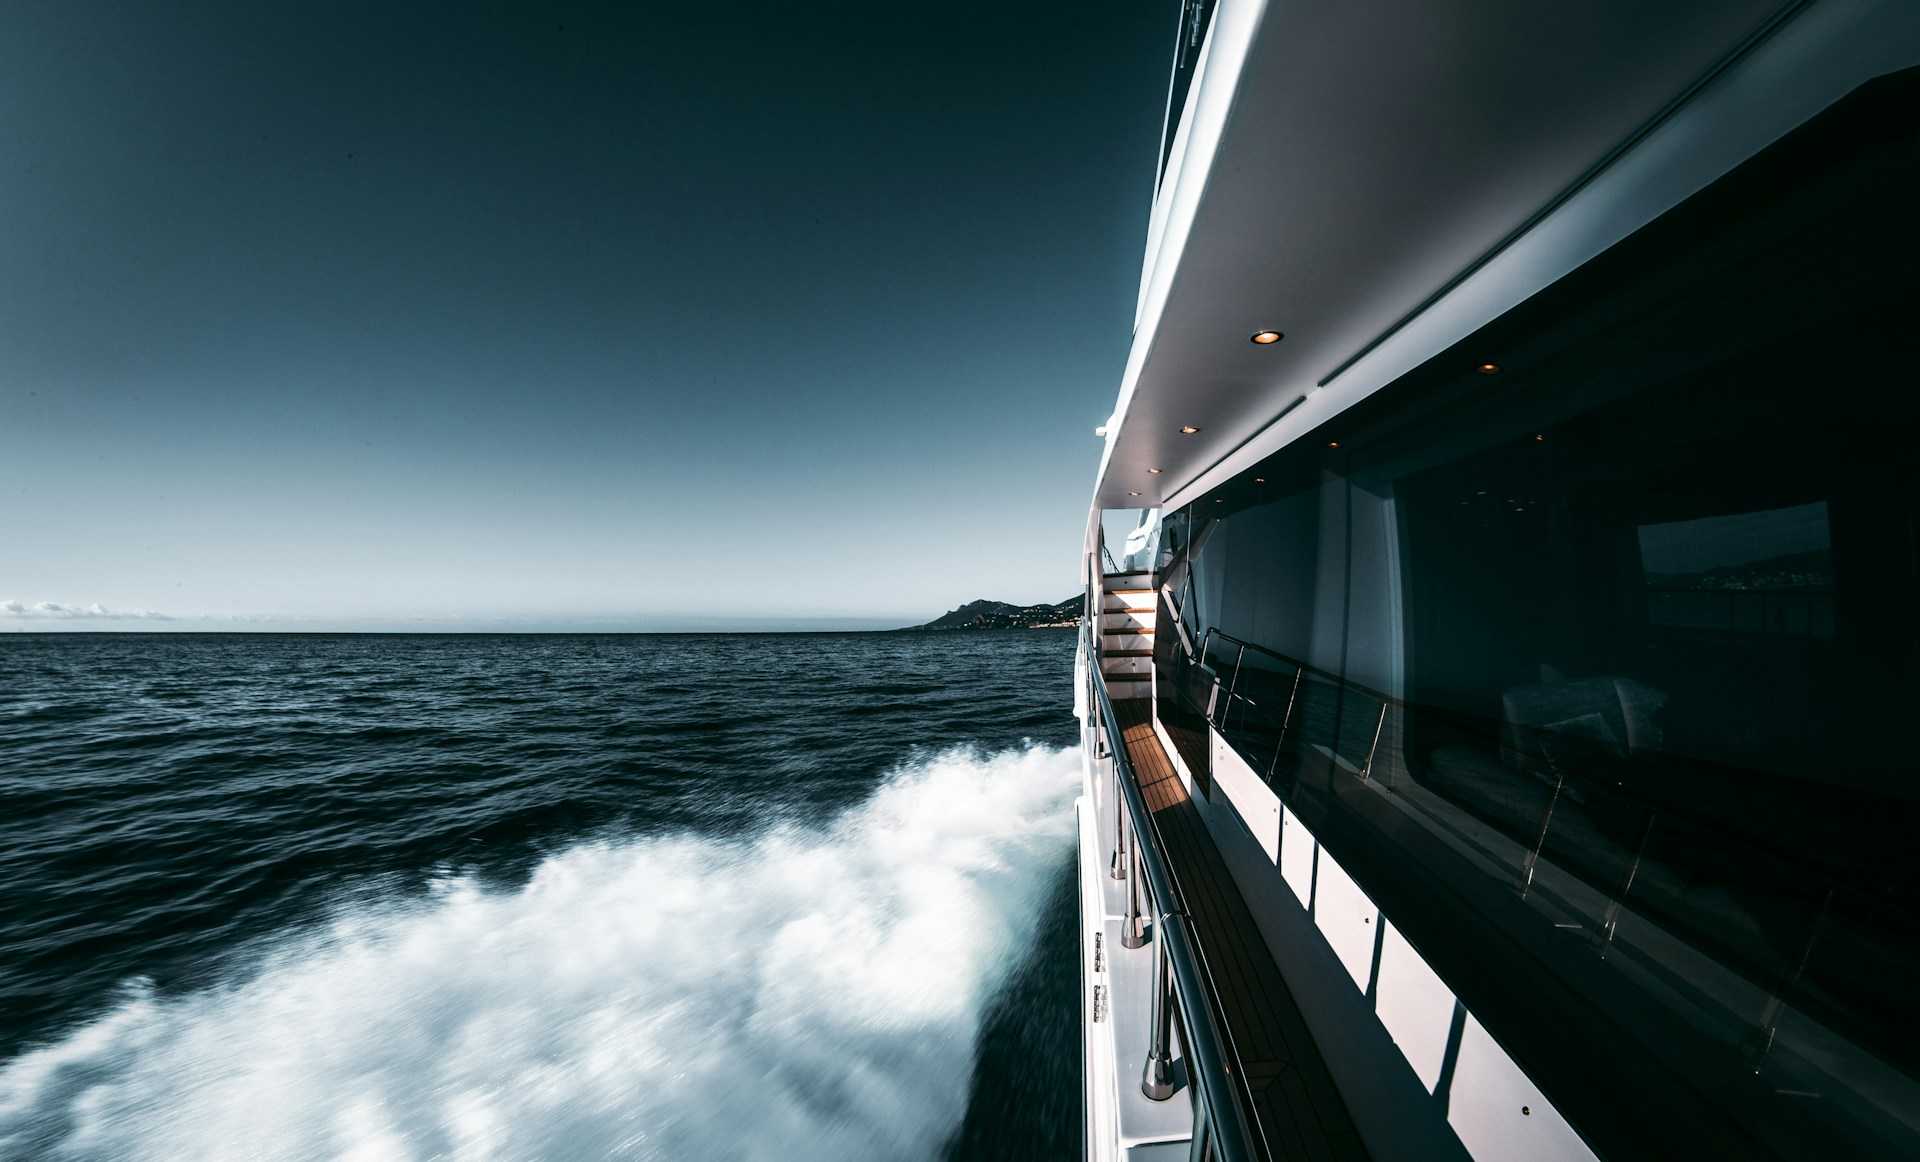 Photo by Zhanzat Mamytova: https://www.pexels.com/photo/white-speedboat-on-body-of-water-3071018/